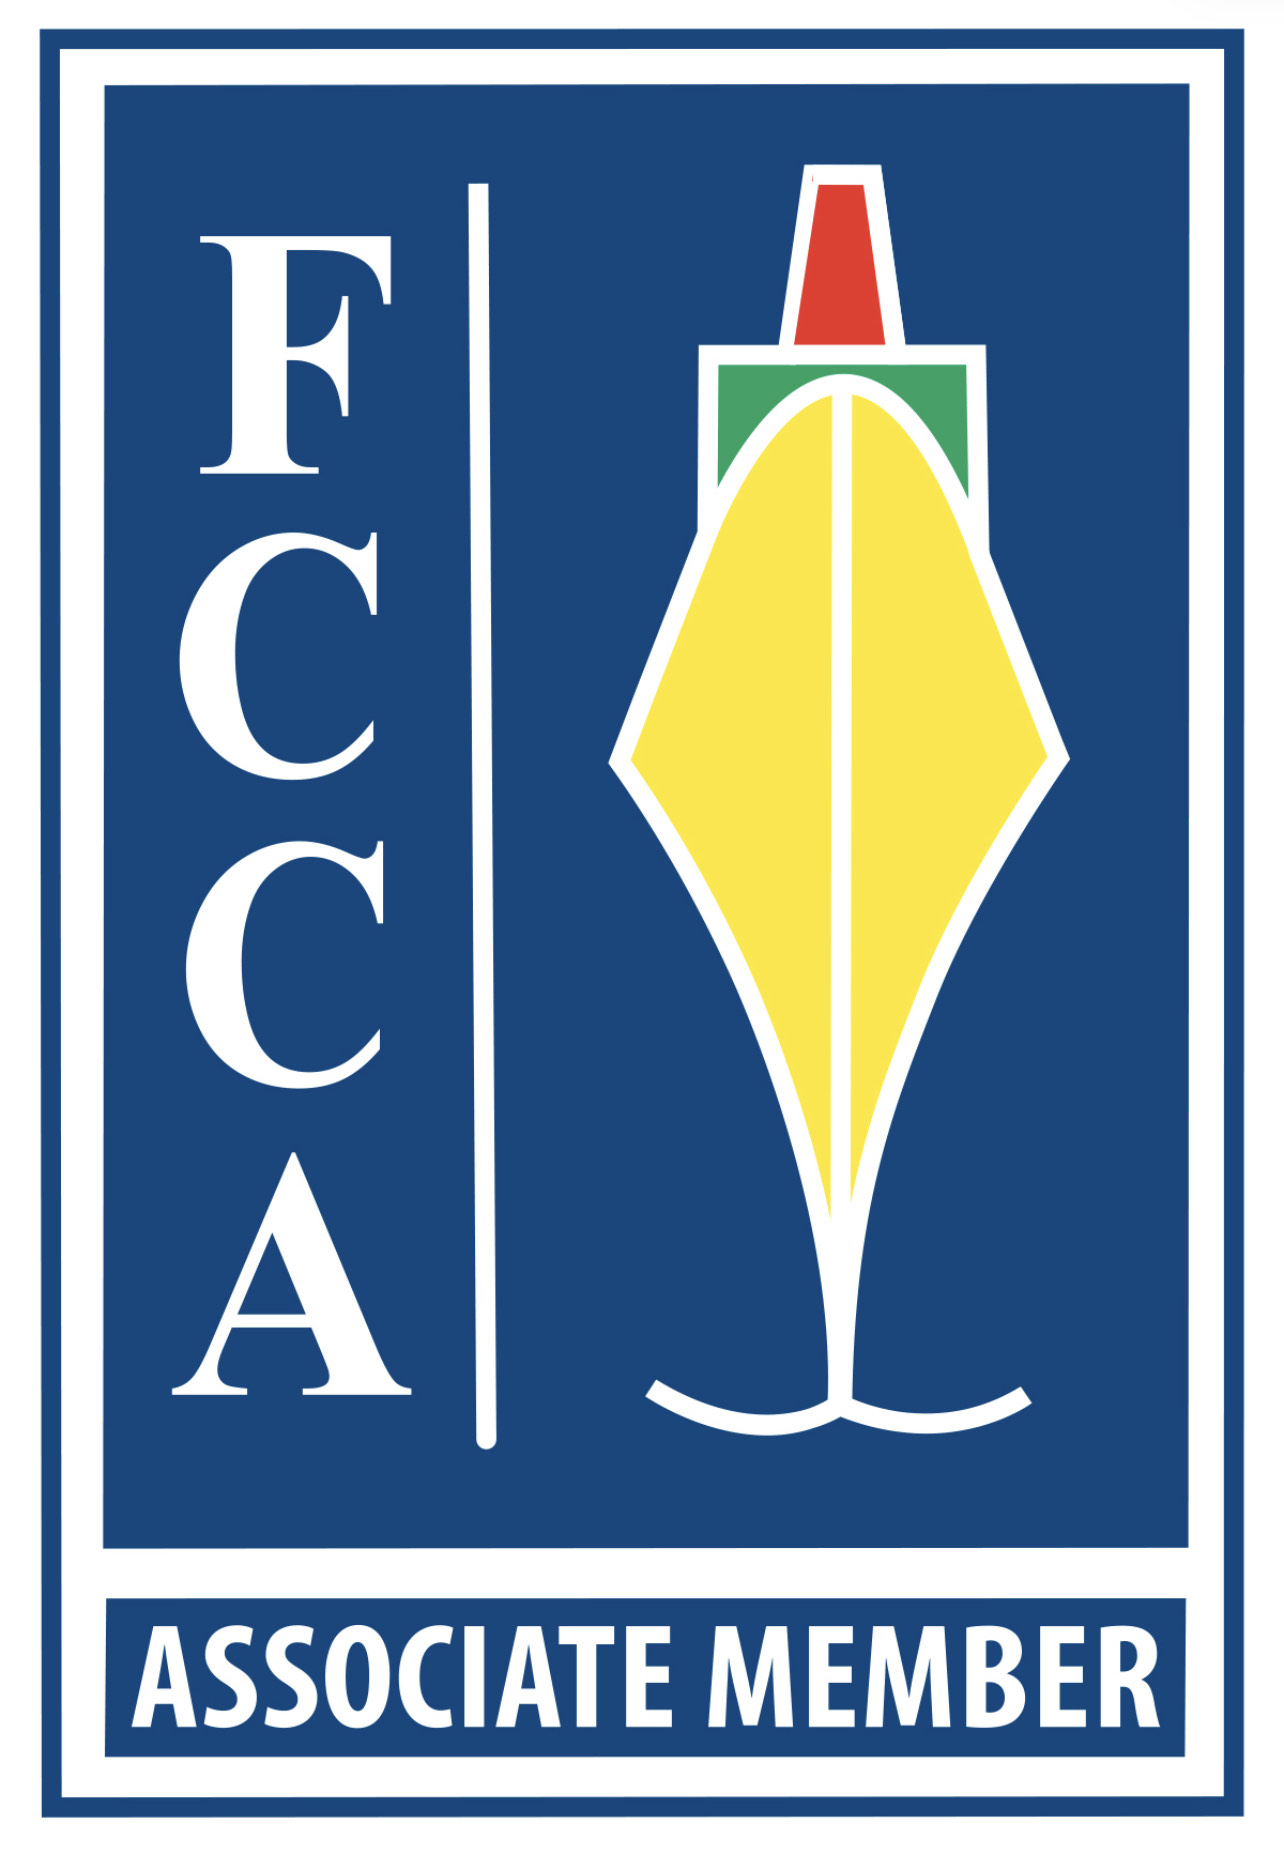 FCCA Associate Member